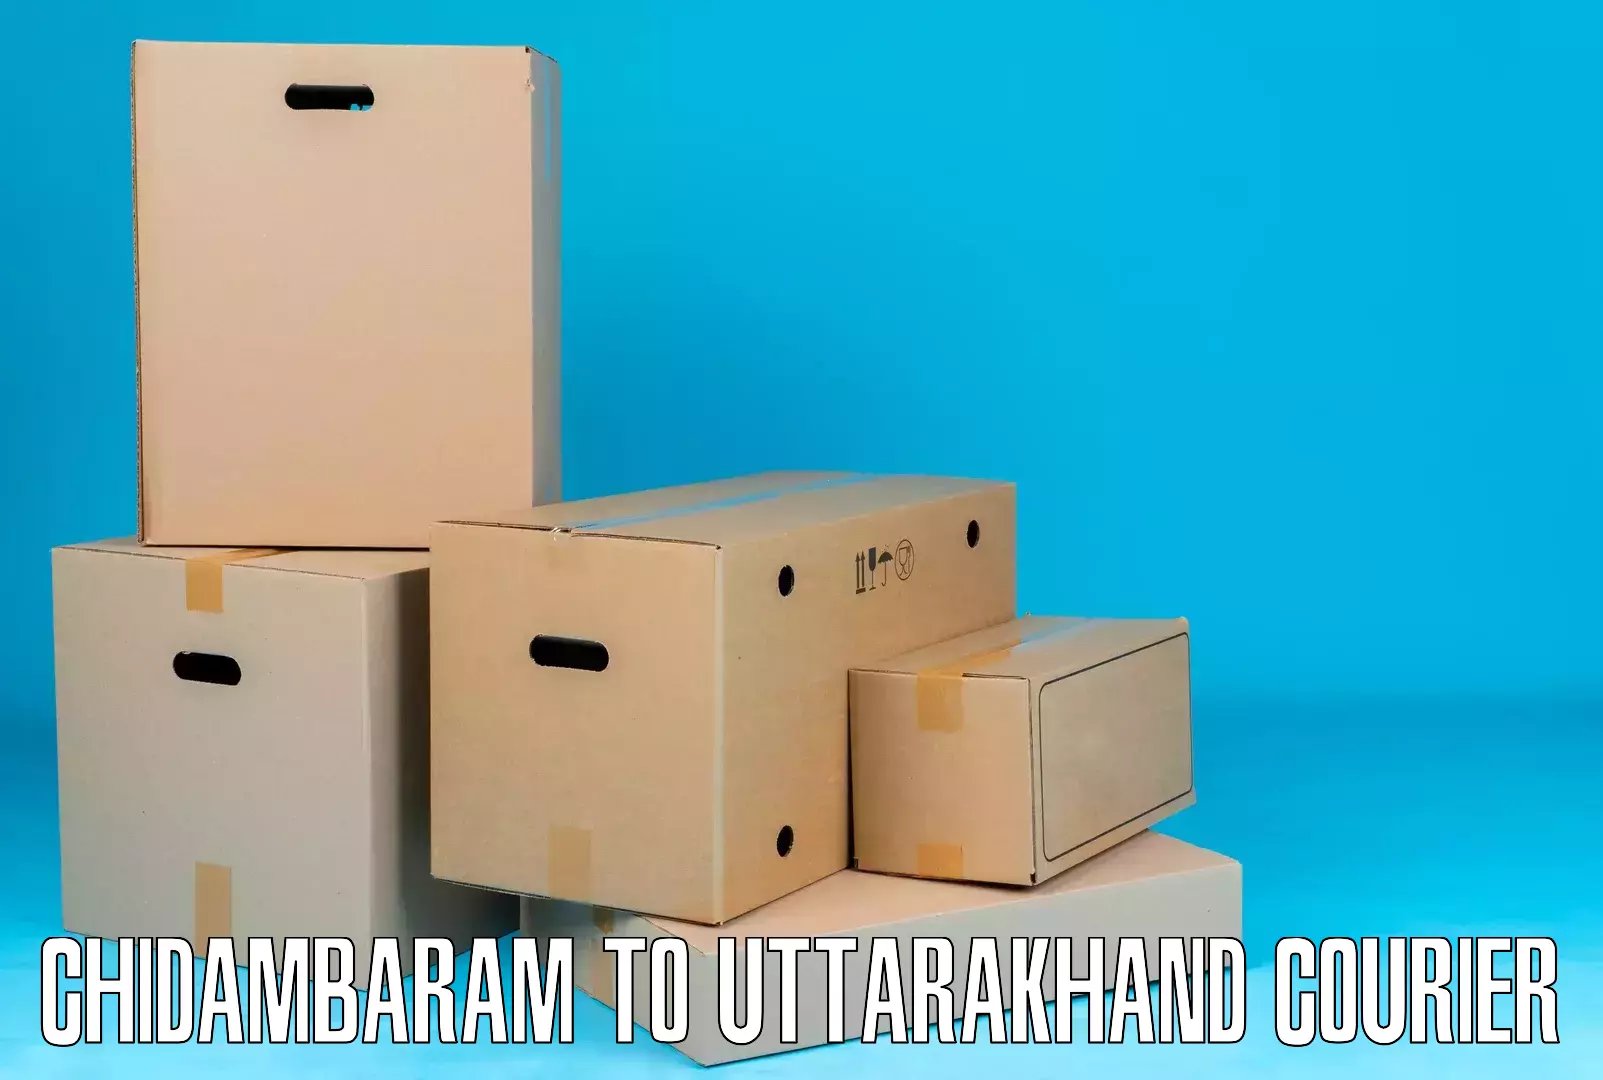 Automated shipping processes Chidambaram to Gairsain